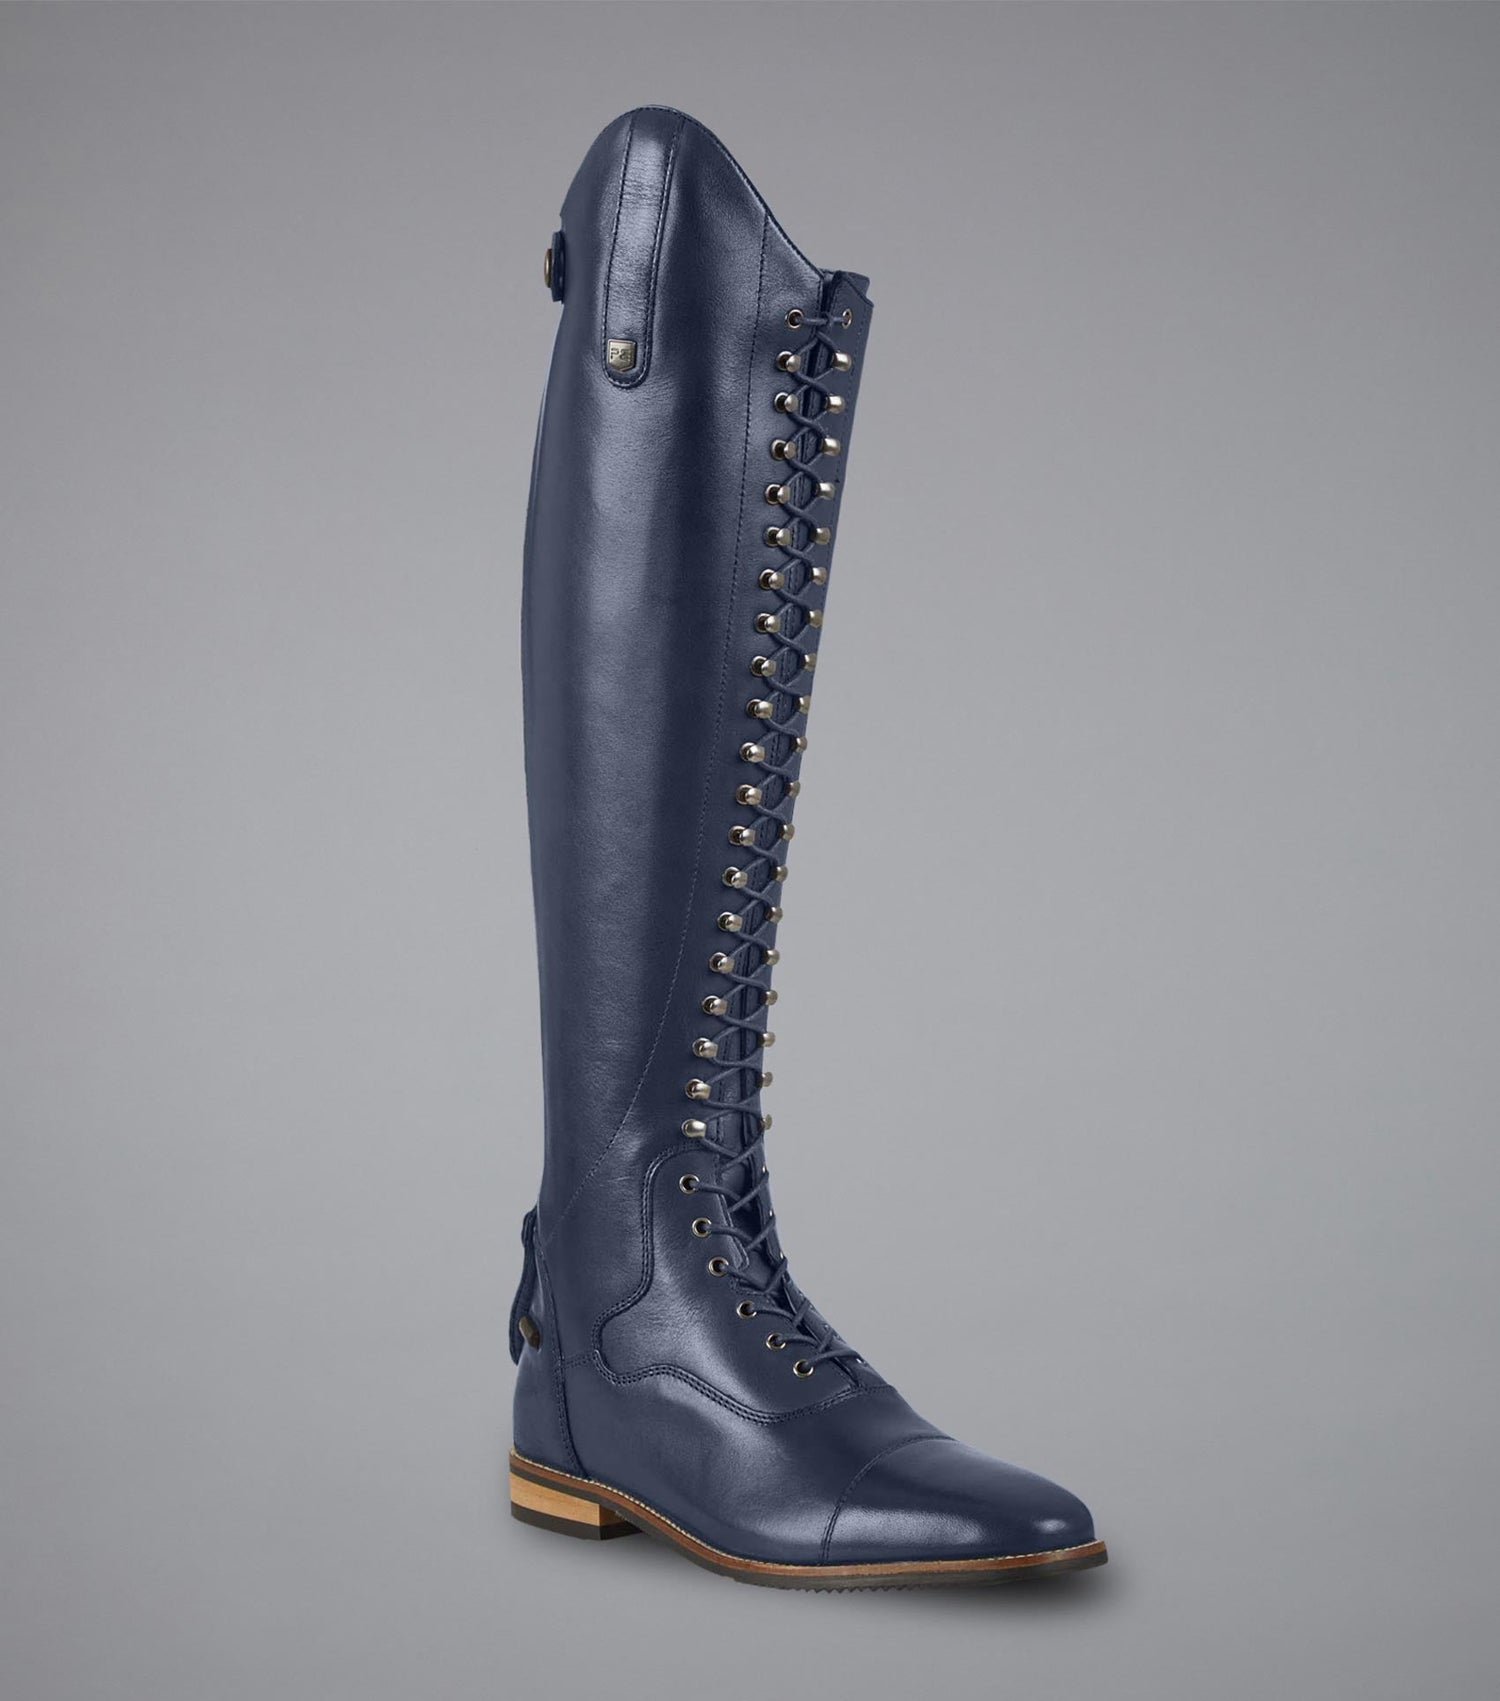 Description:Maurizia Ladies Lace Front Tall Leather Riding Boots_Colour:Navy_Position:1